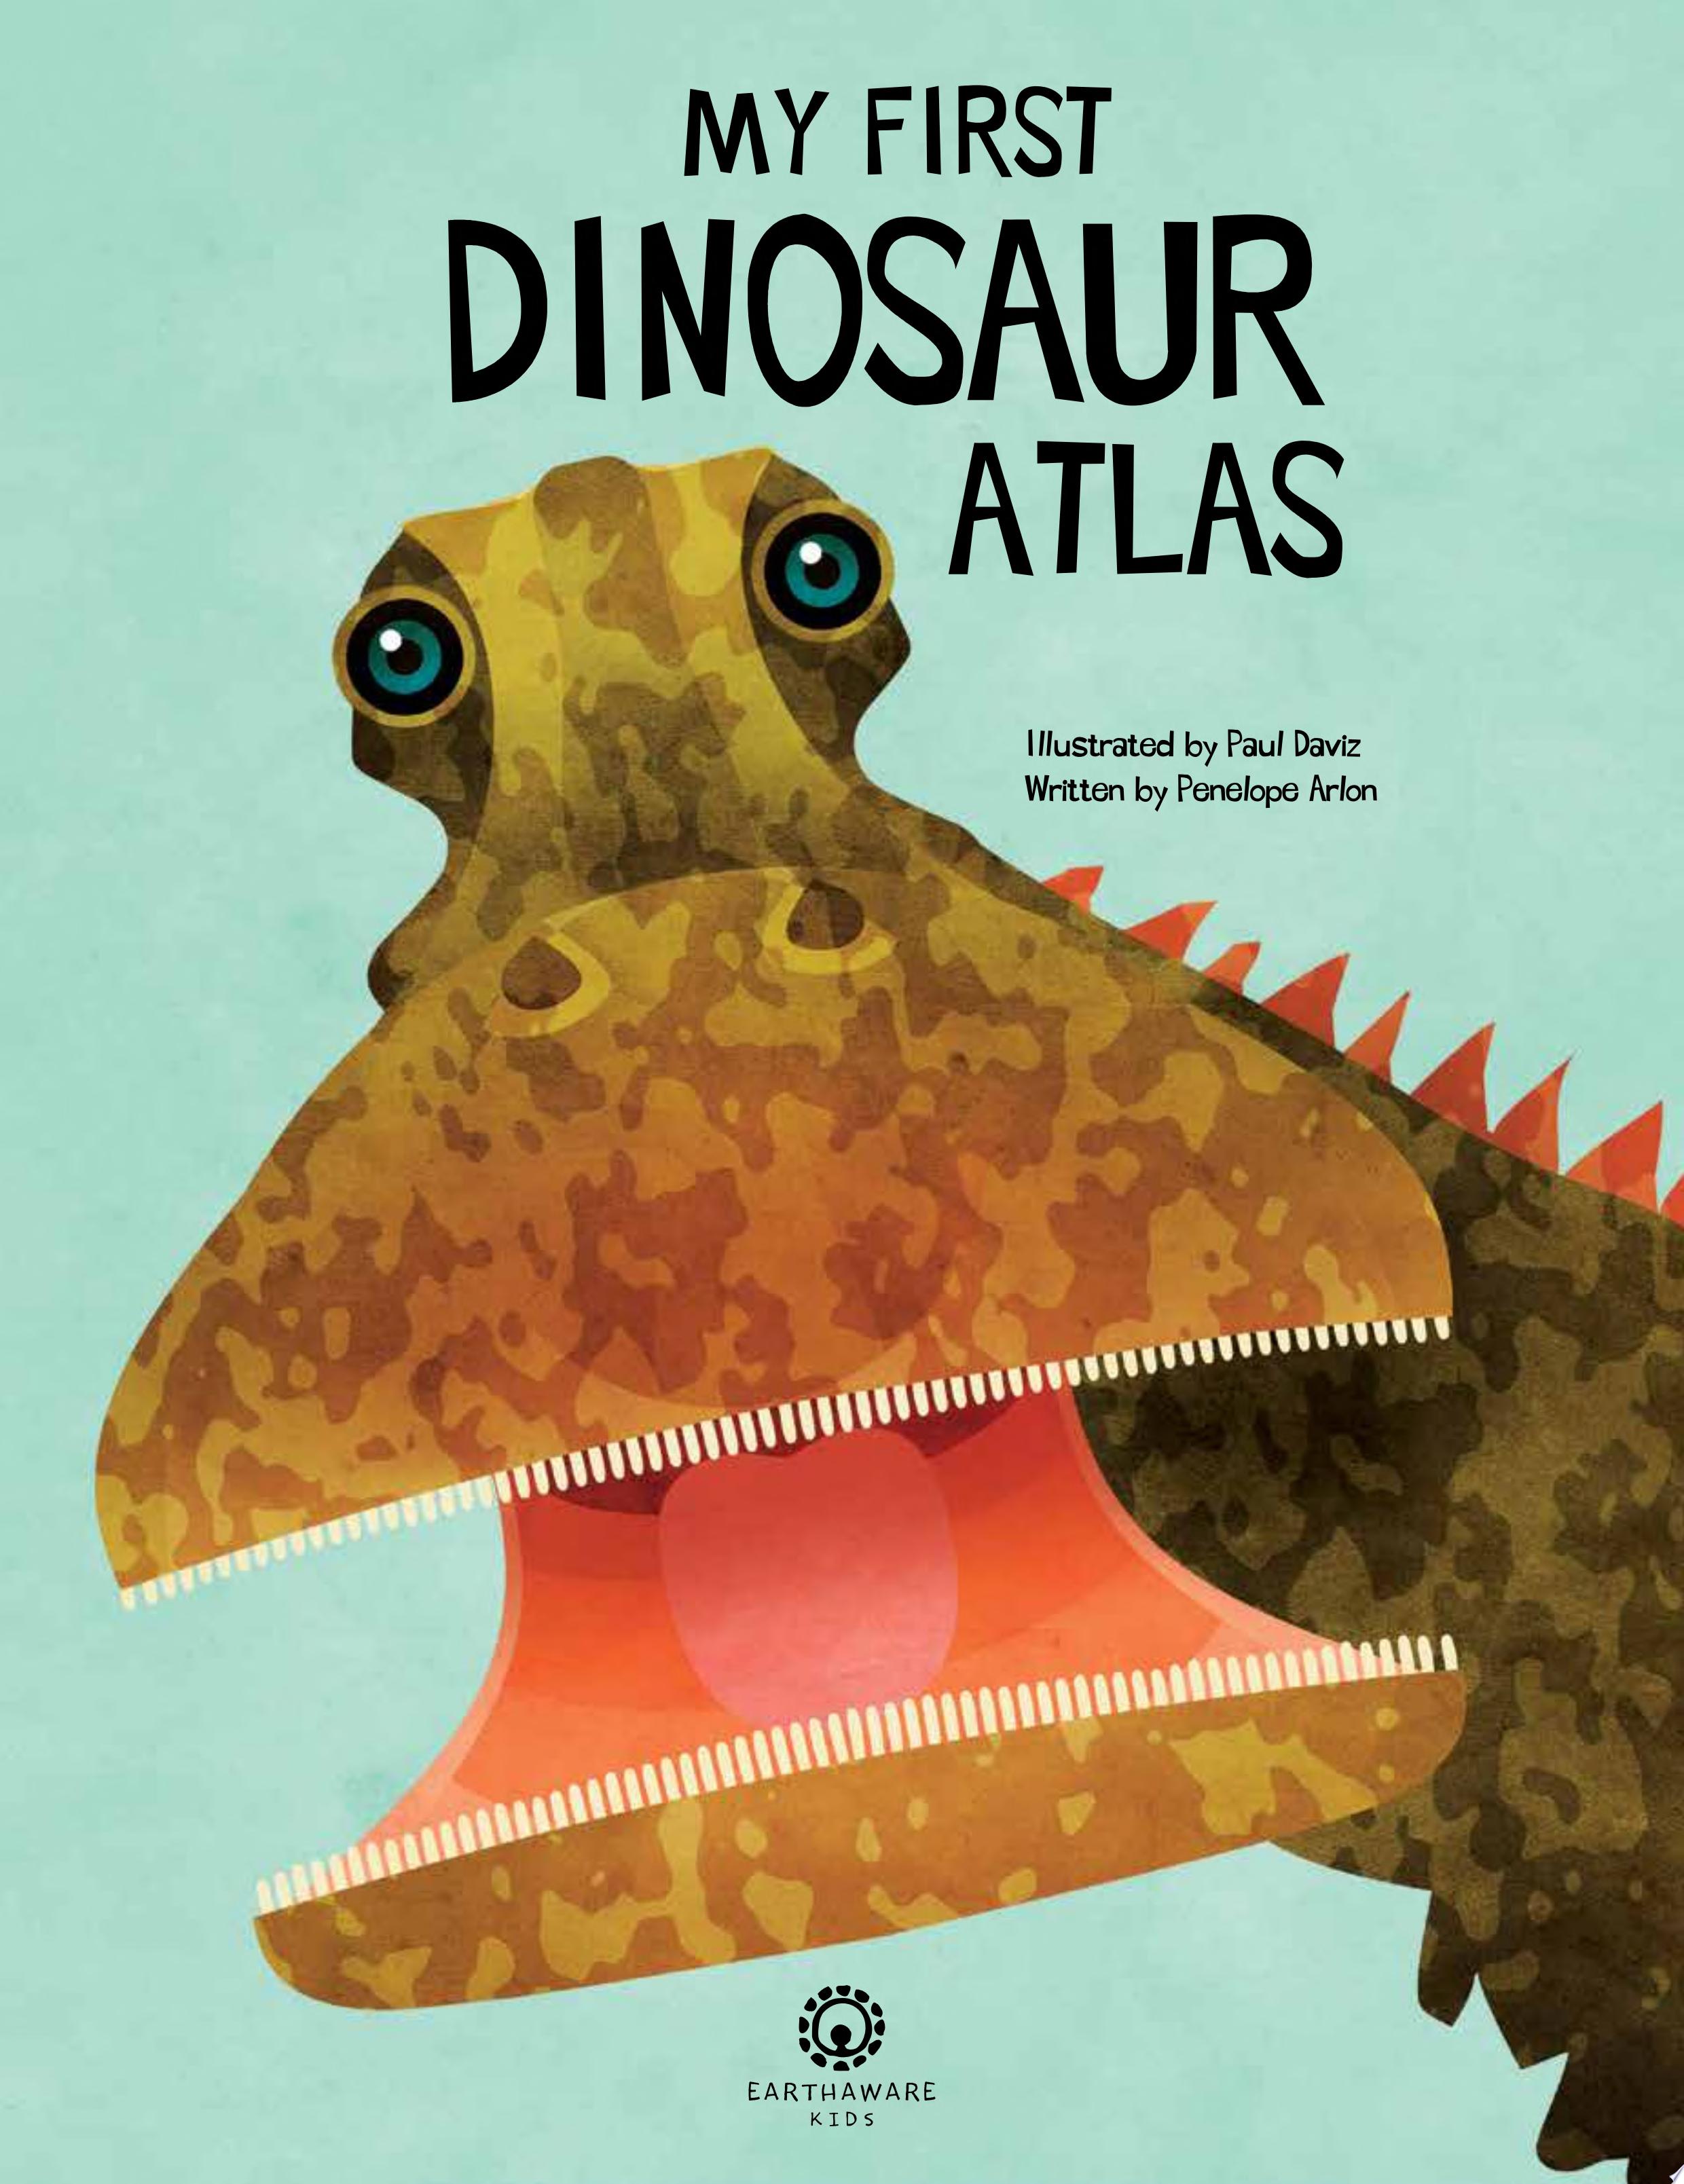 Image for "My First Dinosaur Atlas"